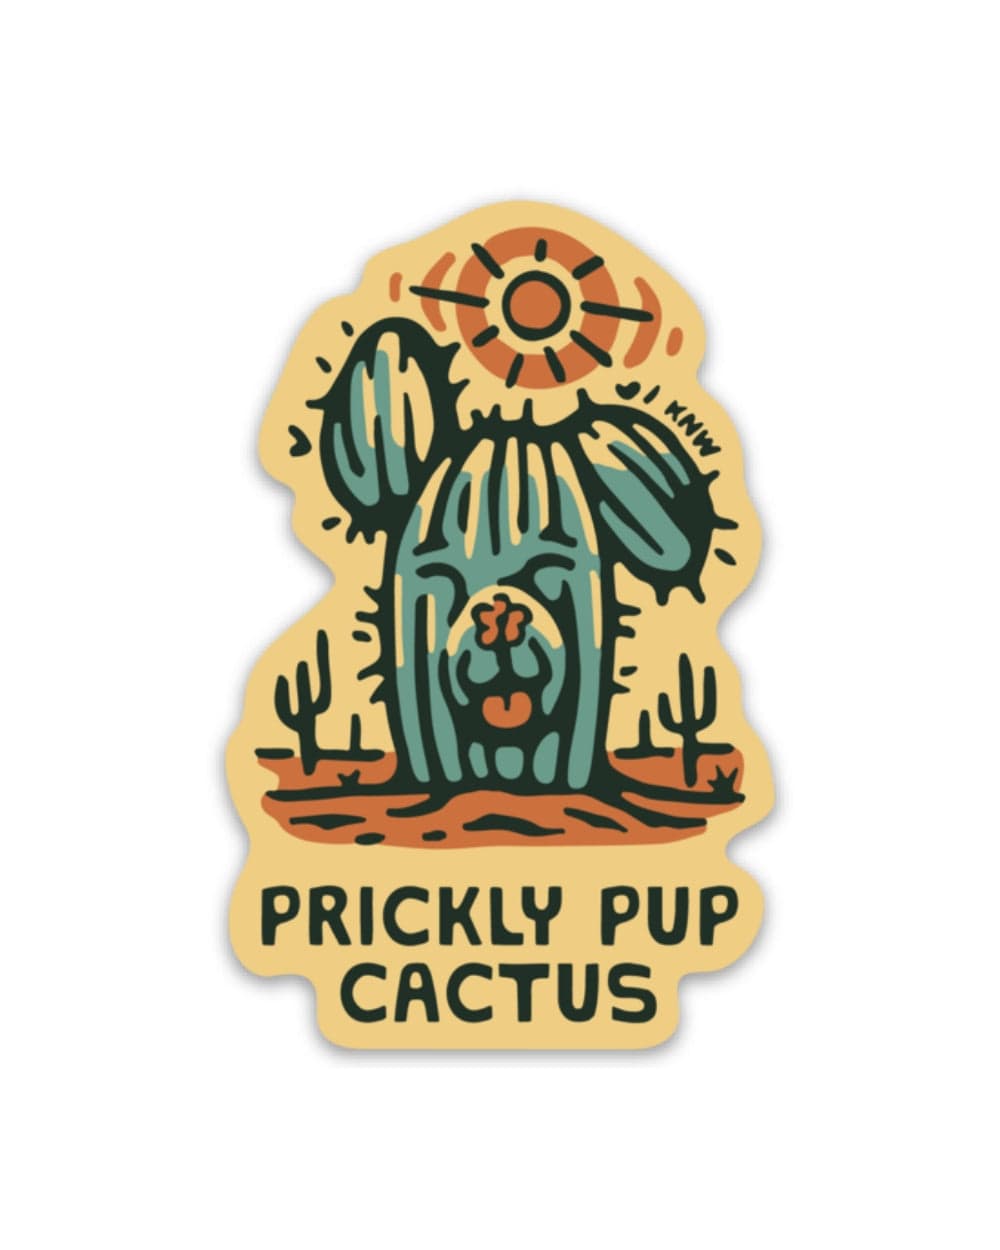 https://cdn.shopify.com/s/files/1/1395/1925/files/keep-nature-wild-prickly-pup-cactus-sticker-34769753997503.jpg?v=1692823564&width=1000